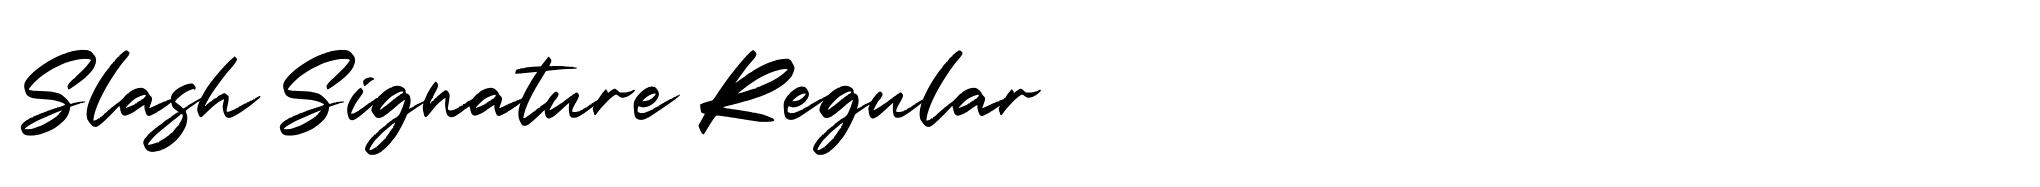 Slash Signature Regular image